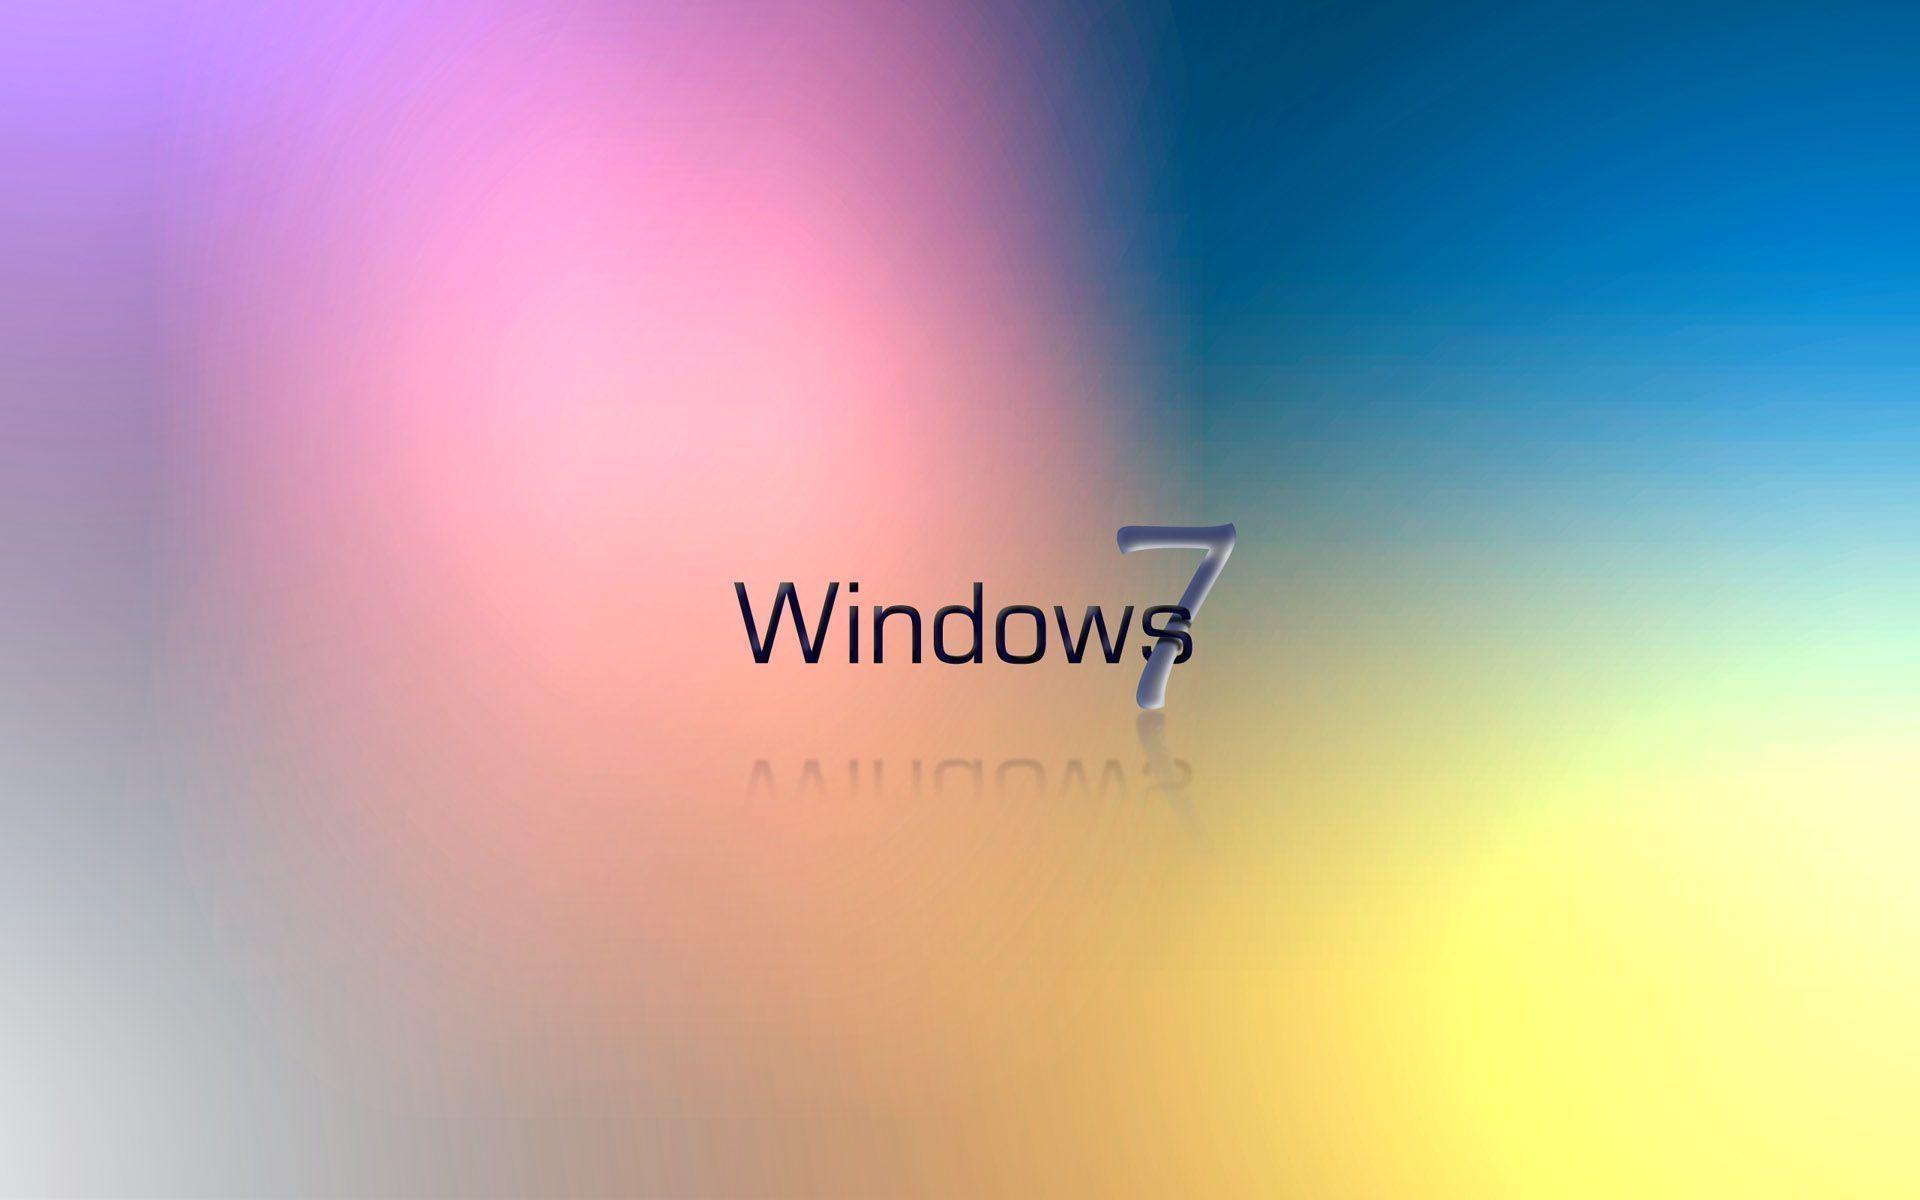 Windows 7 Ultimate wallpaper